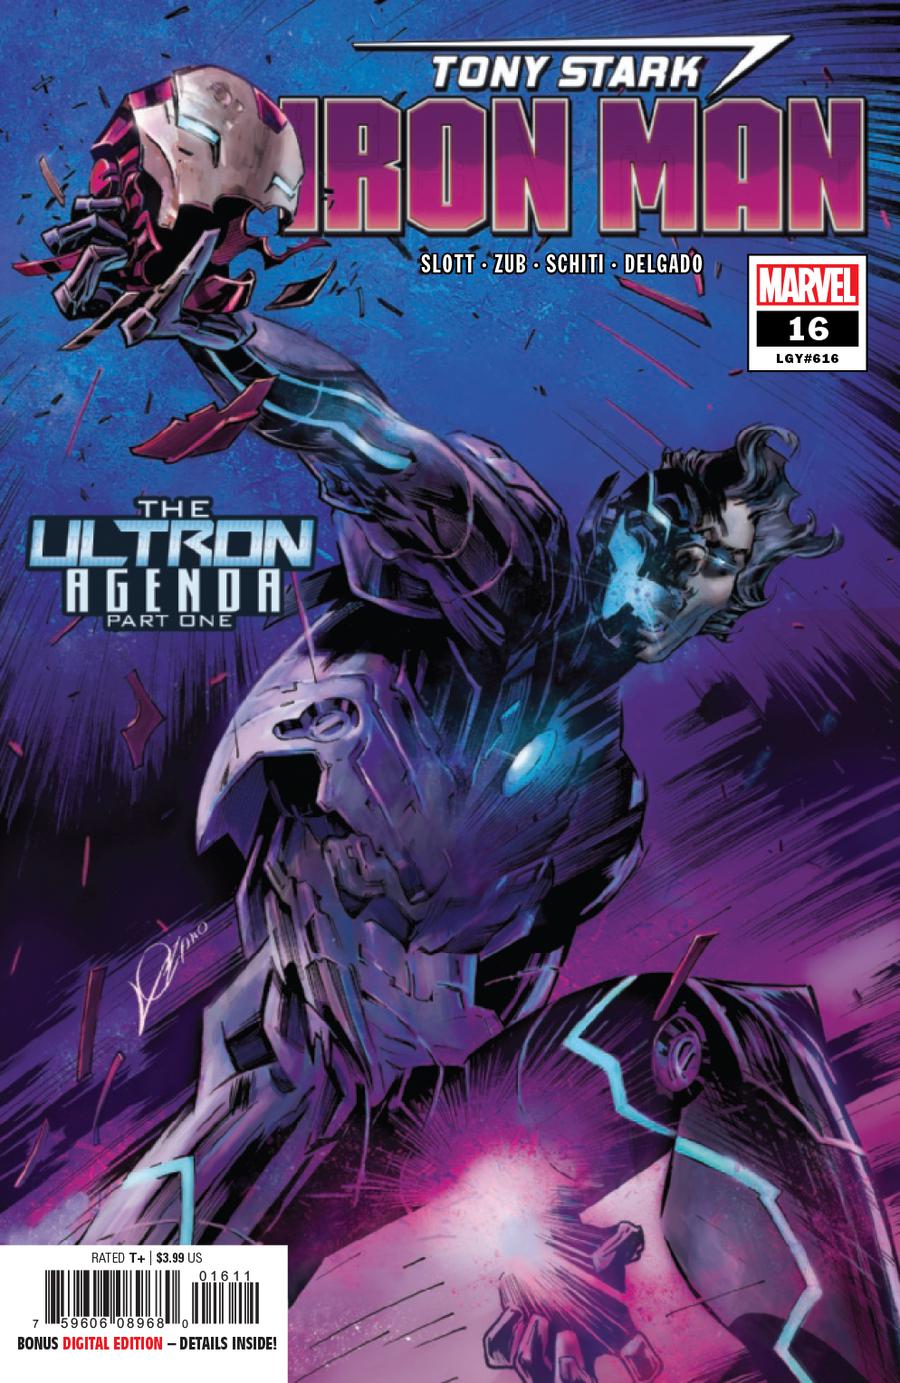 Tony Stark Iron Man #16 Cover A Regular Alexander Lozano Cover